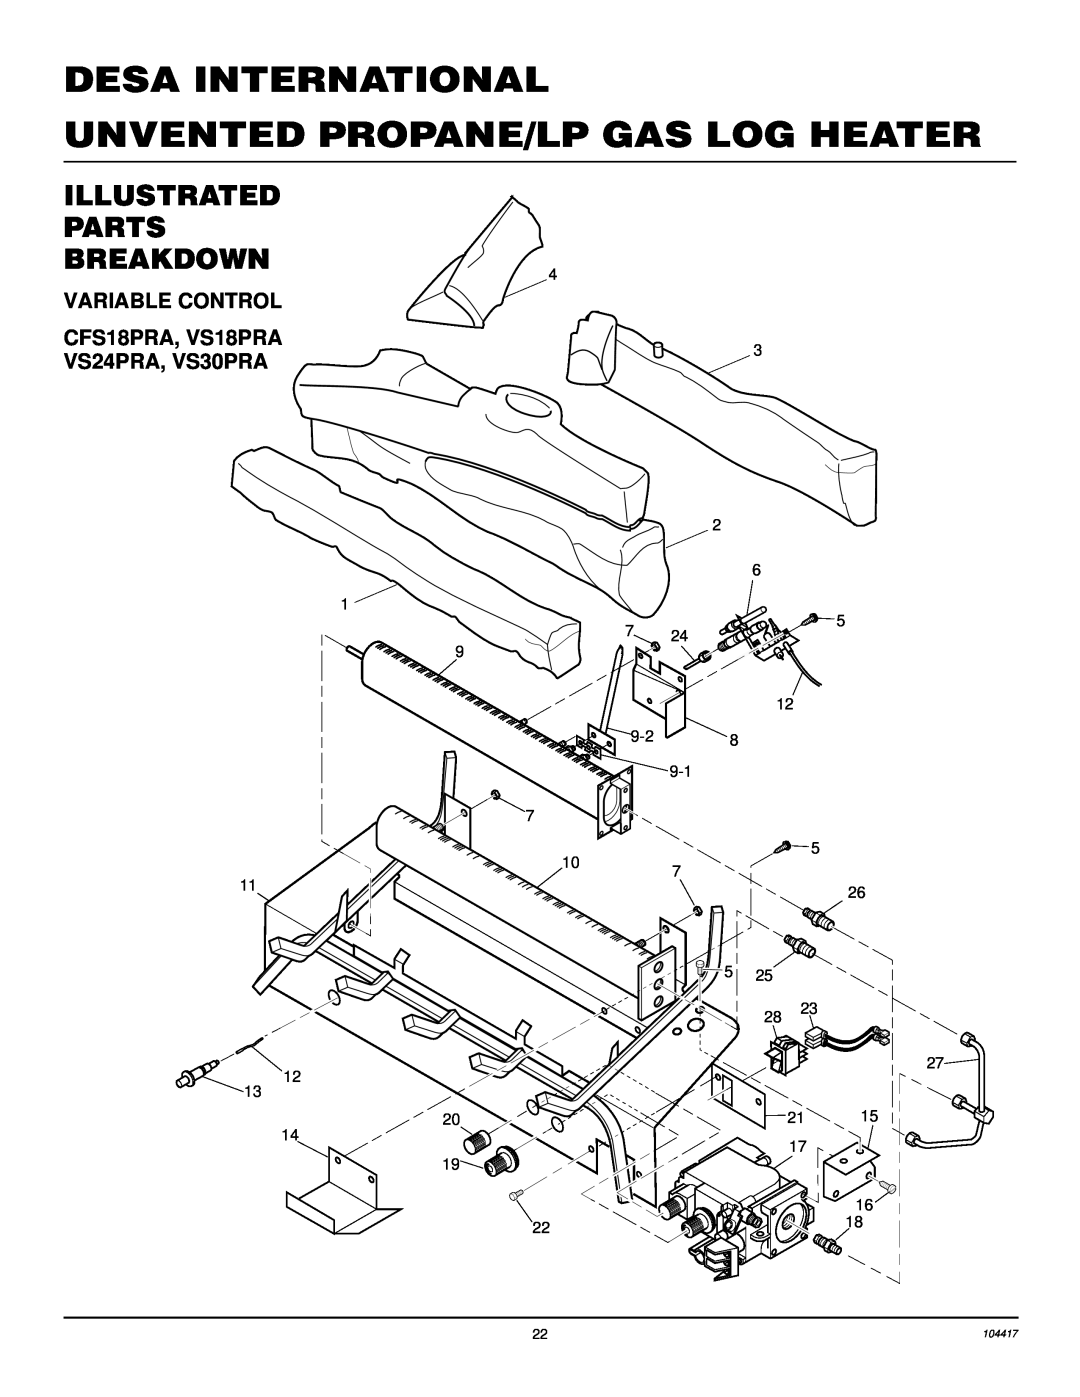 Desa Illustrated Parts Breakdown, VARIABLE CONTROL CFS18PRA, VS18PRA, VS24PRA, VS30PRA, Desa International 